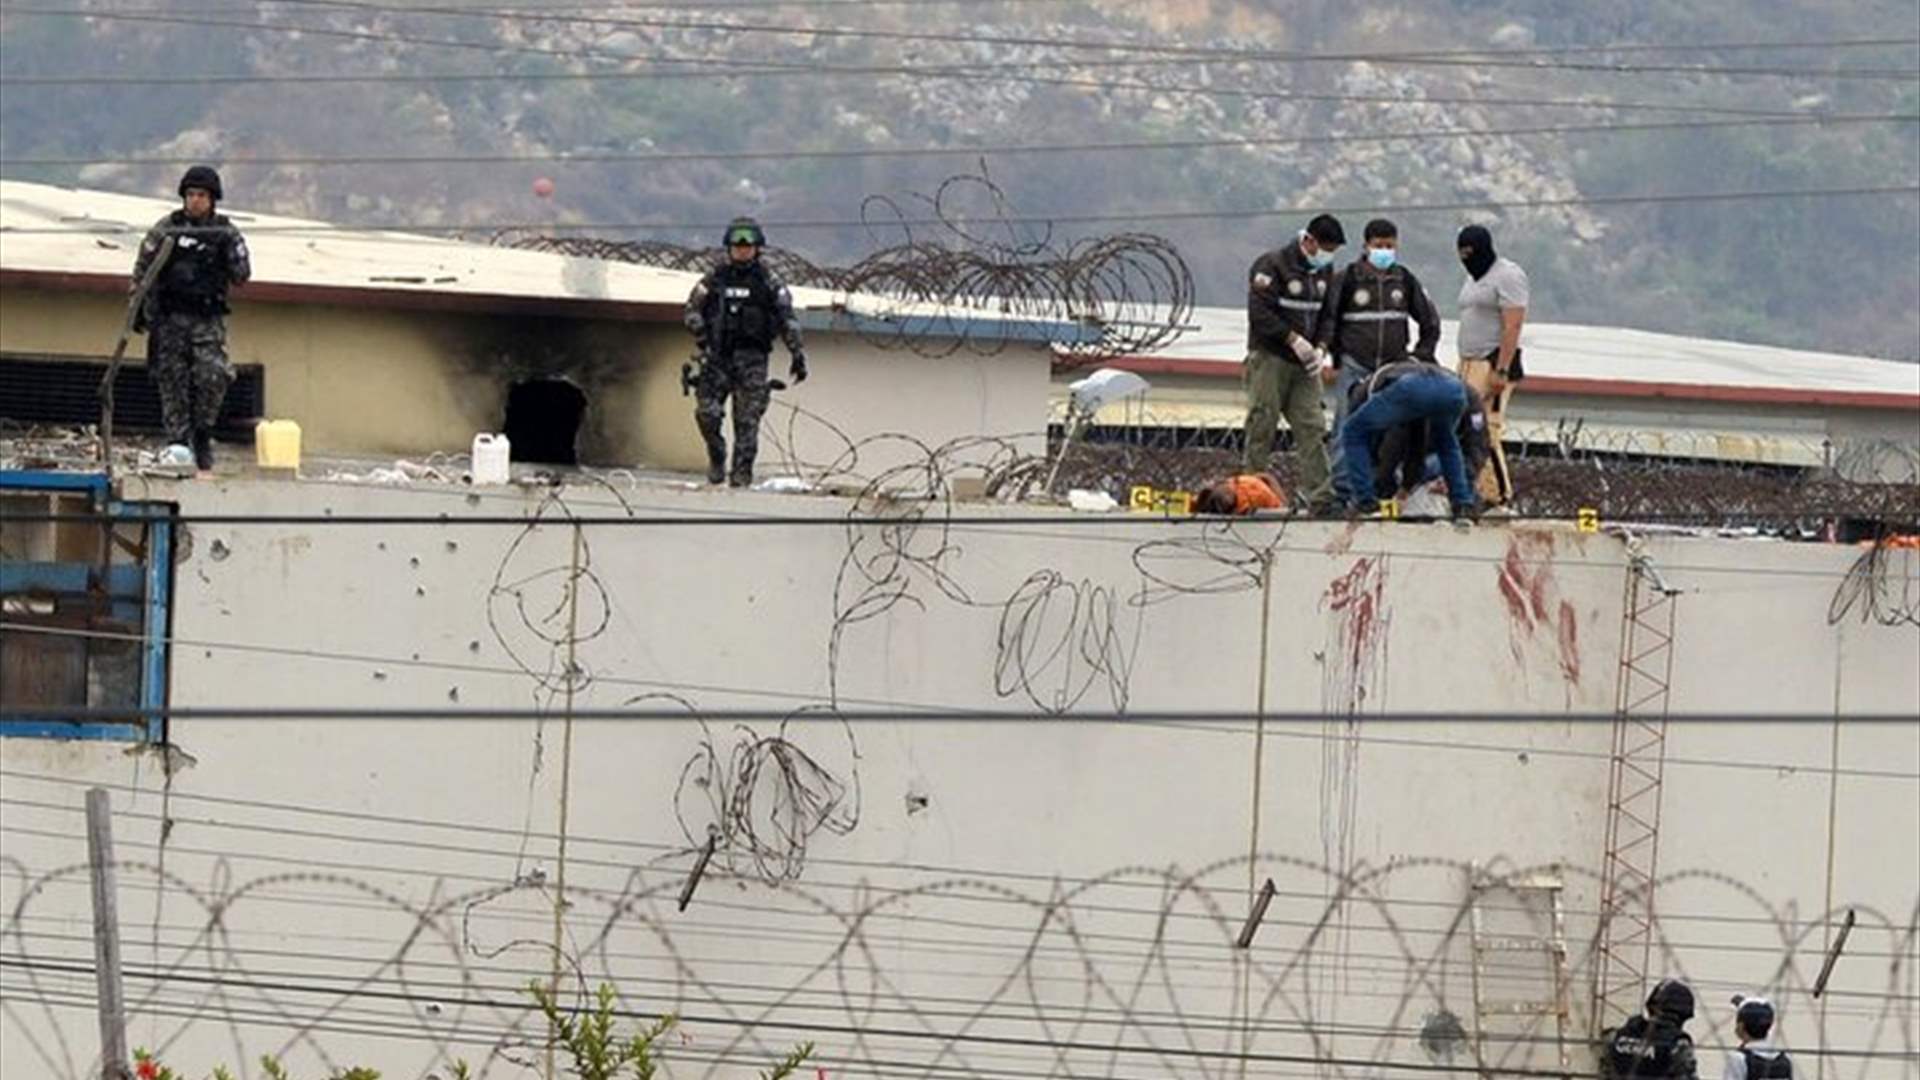 Violence Erupts in Ecuadorian Prison, Leaving Six Inmates Dead